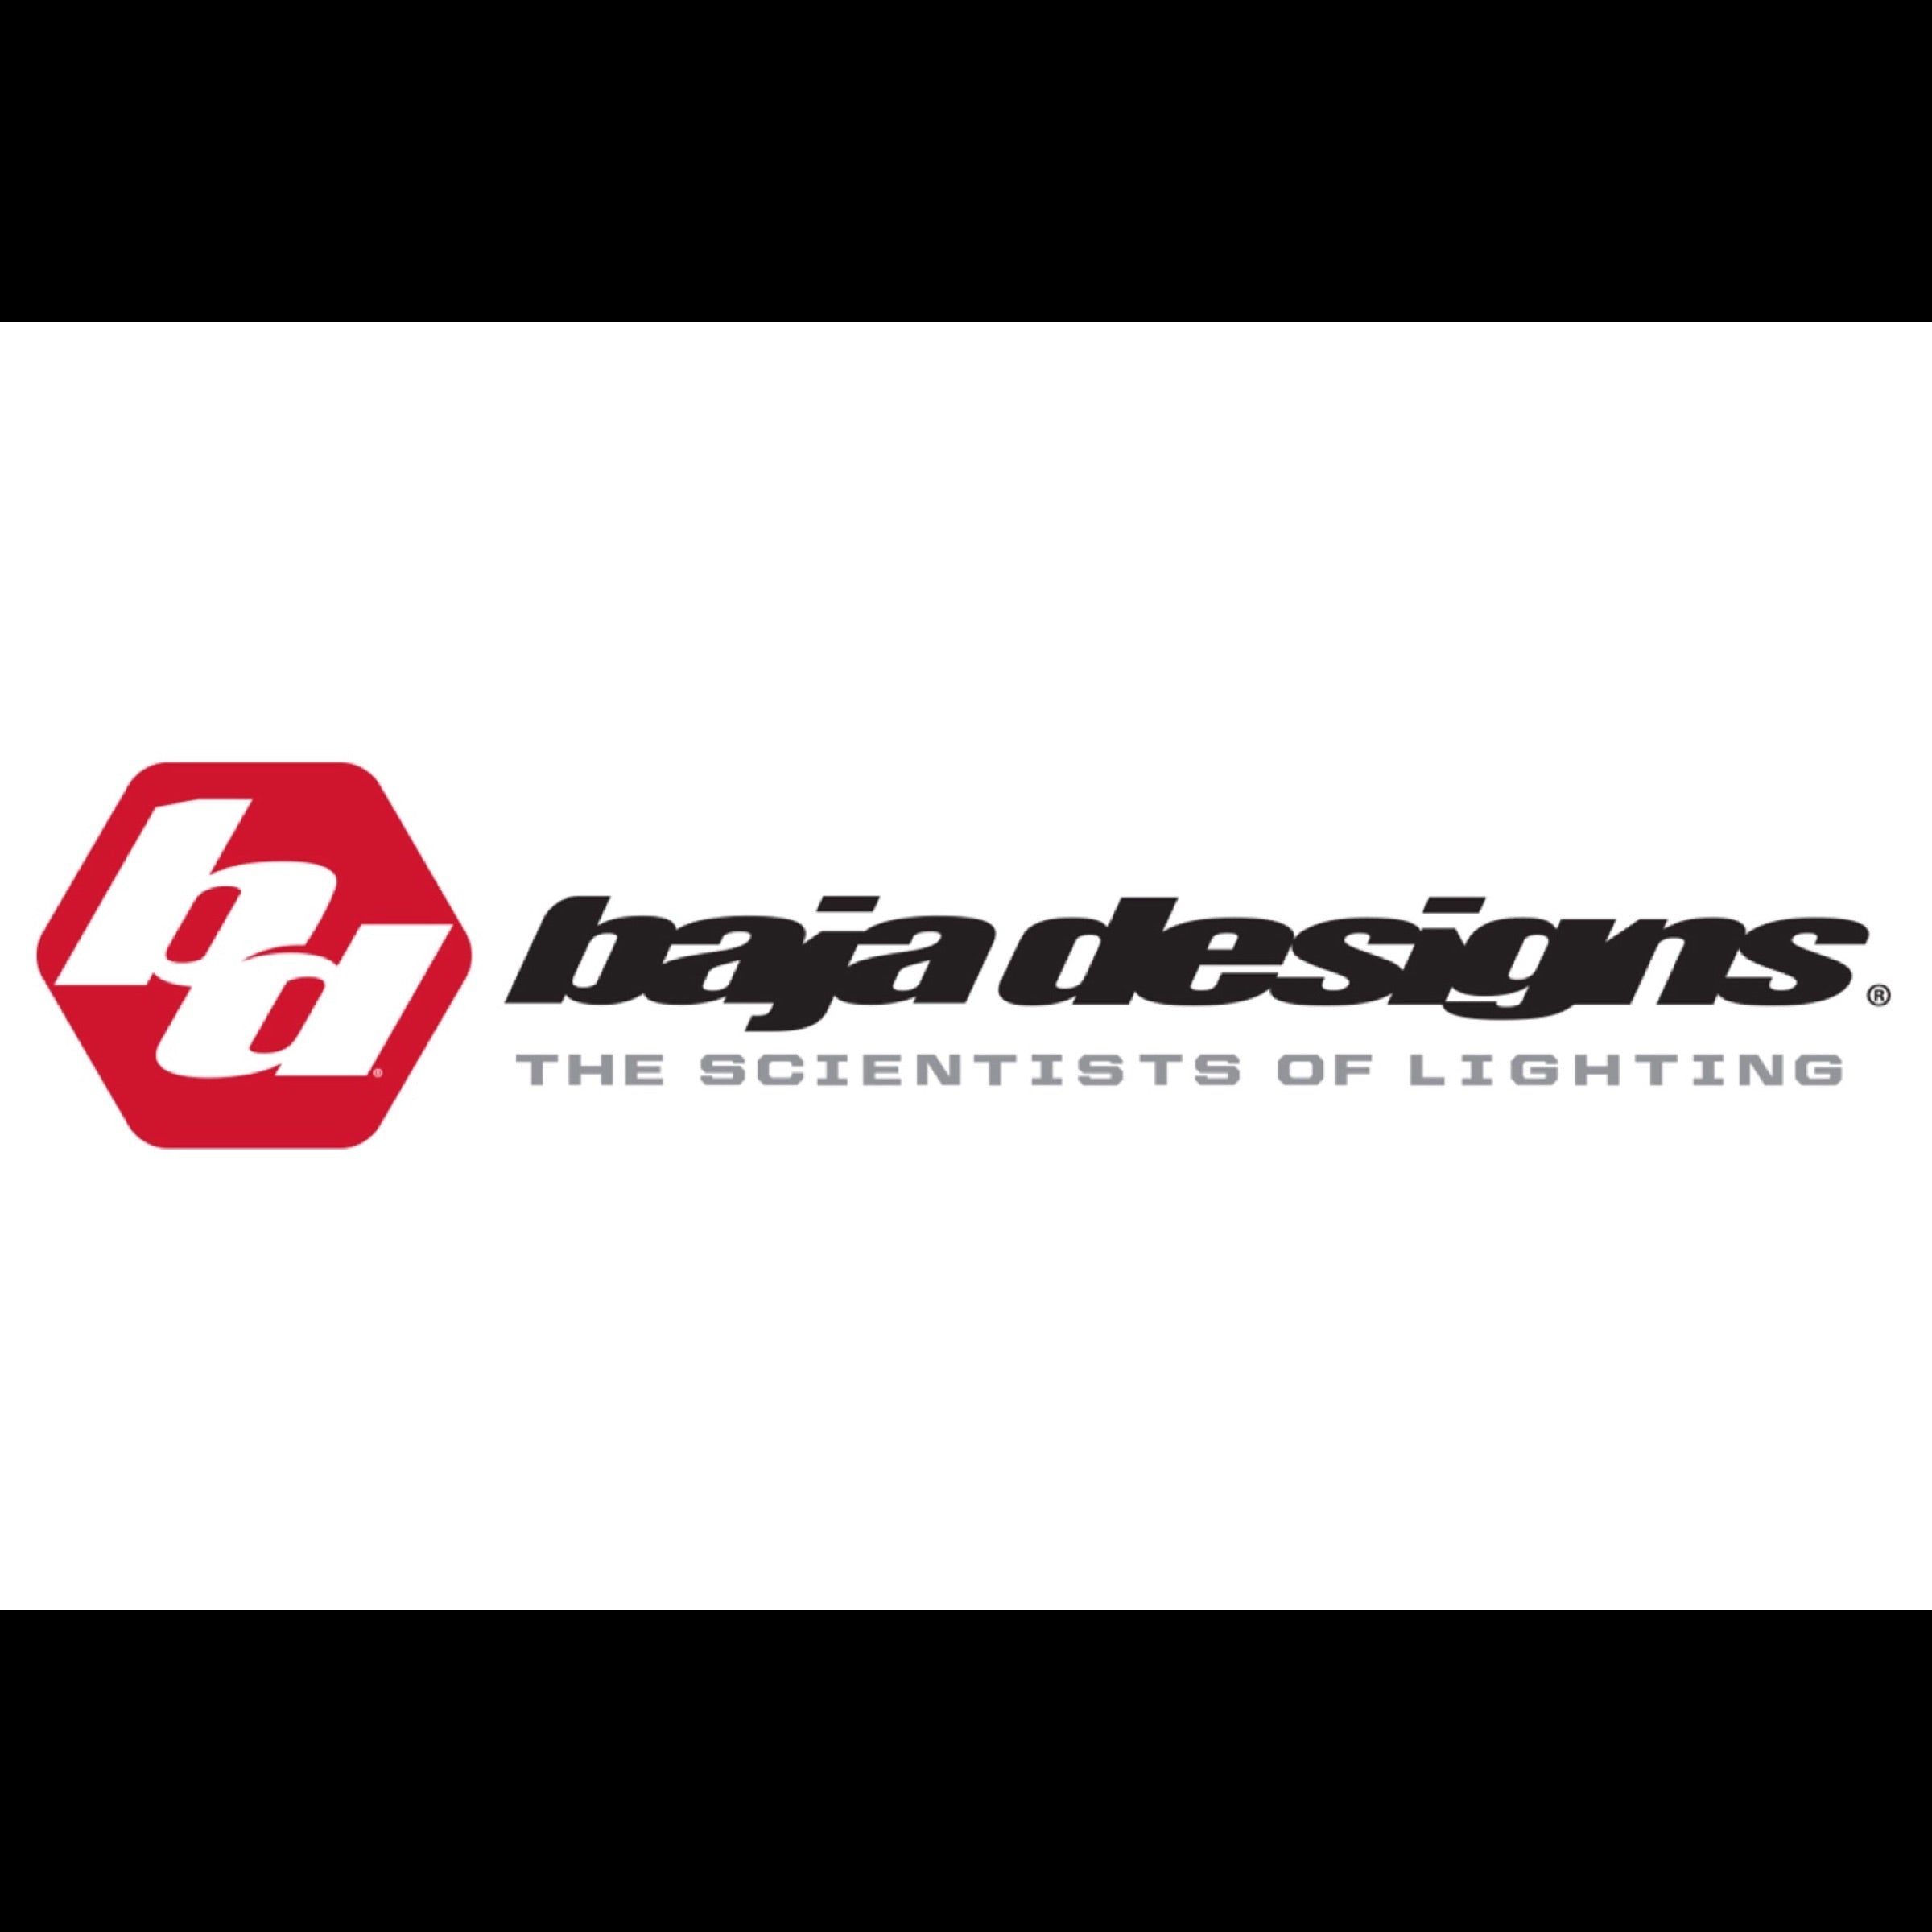 Baja Designs logo with white background